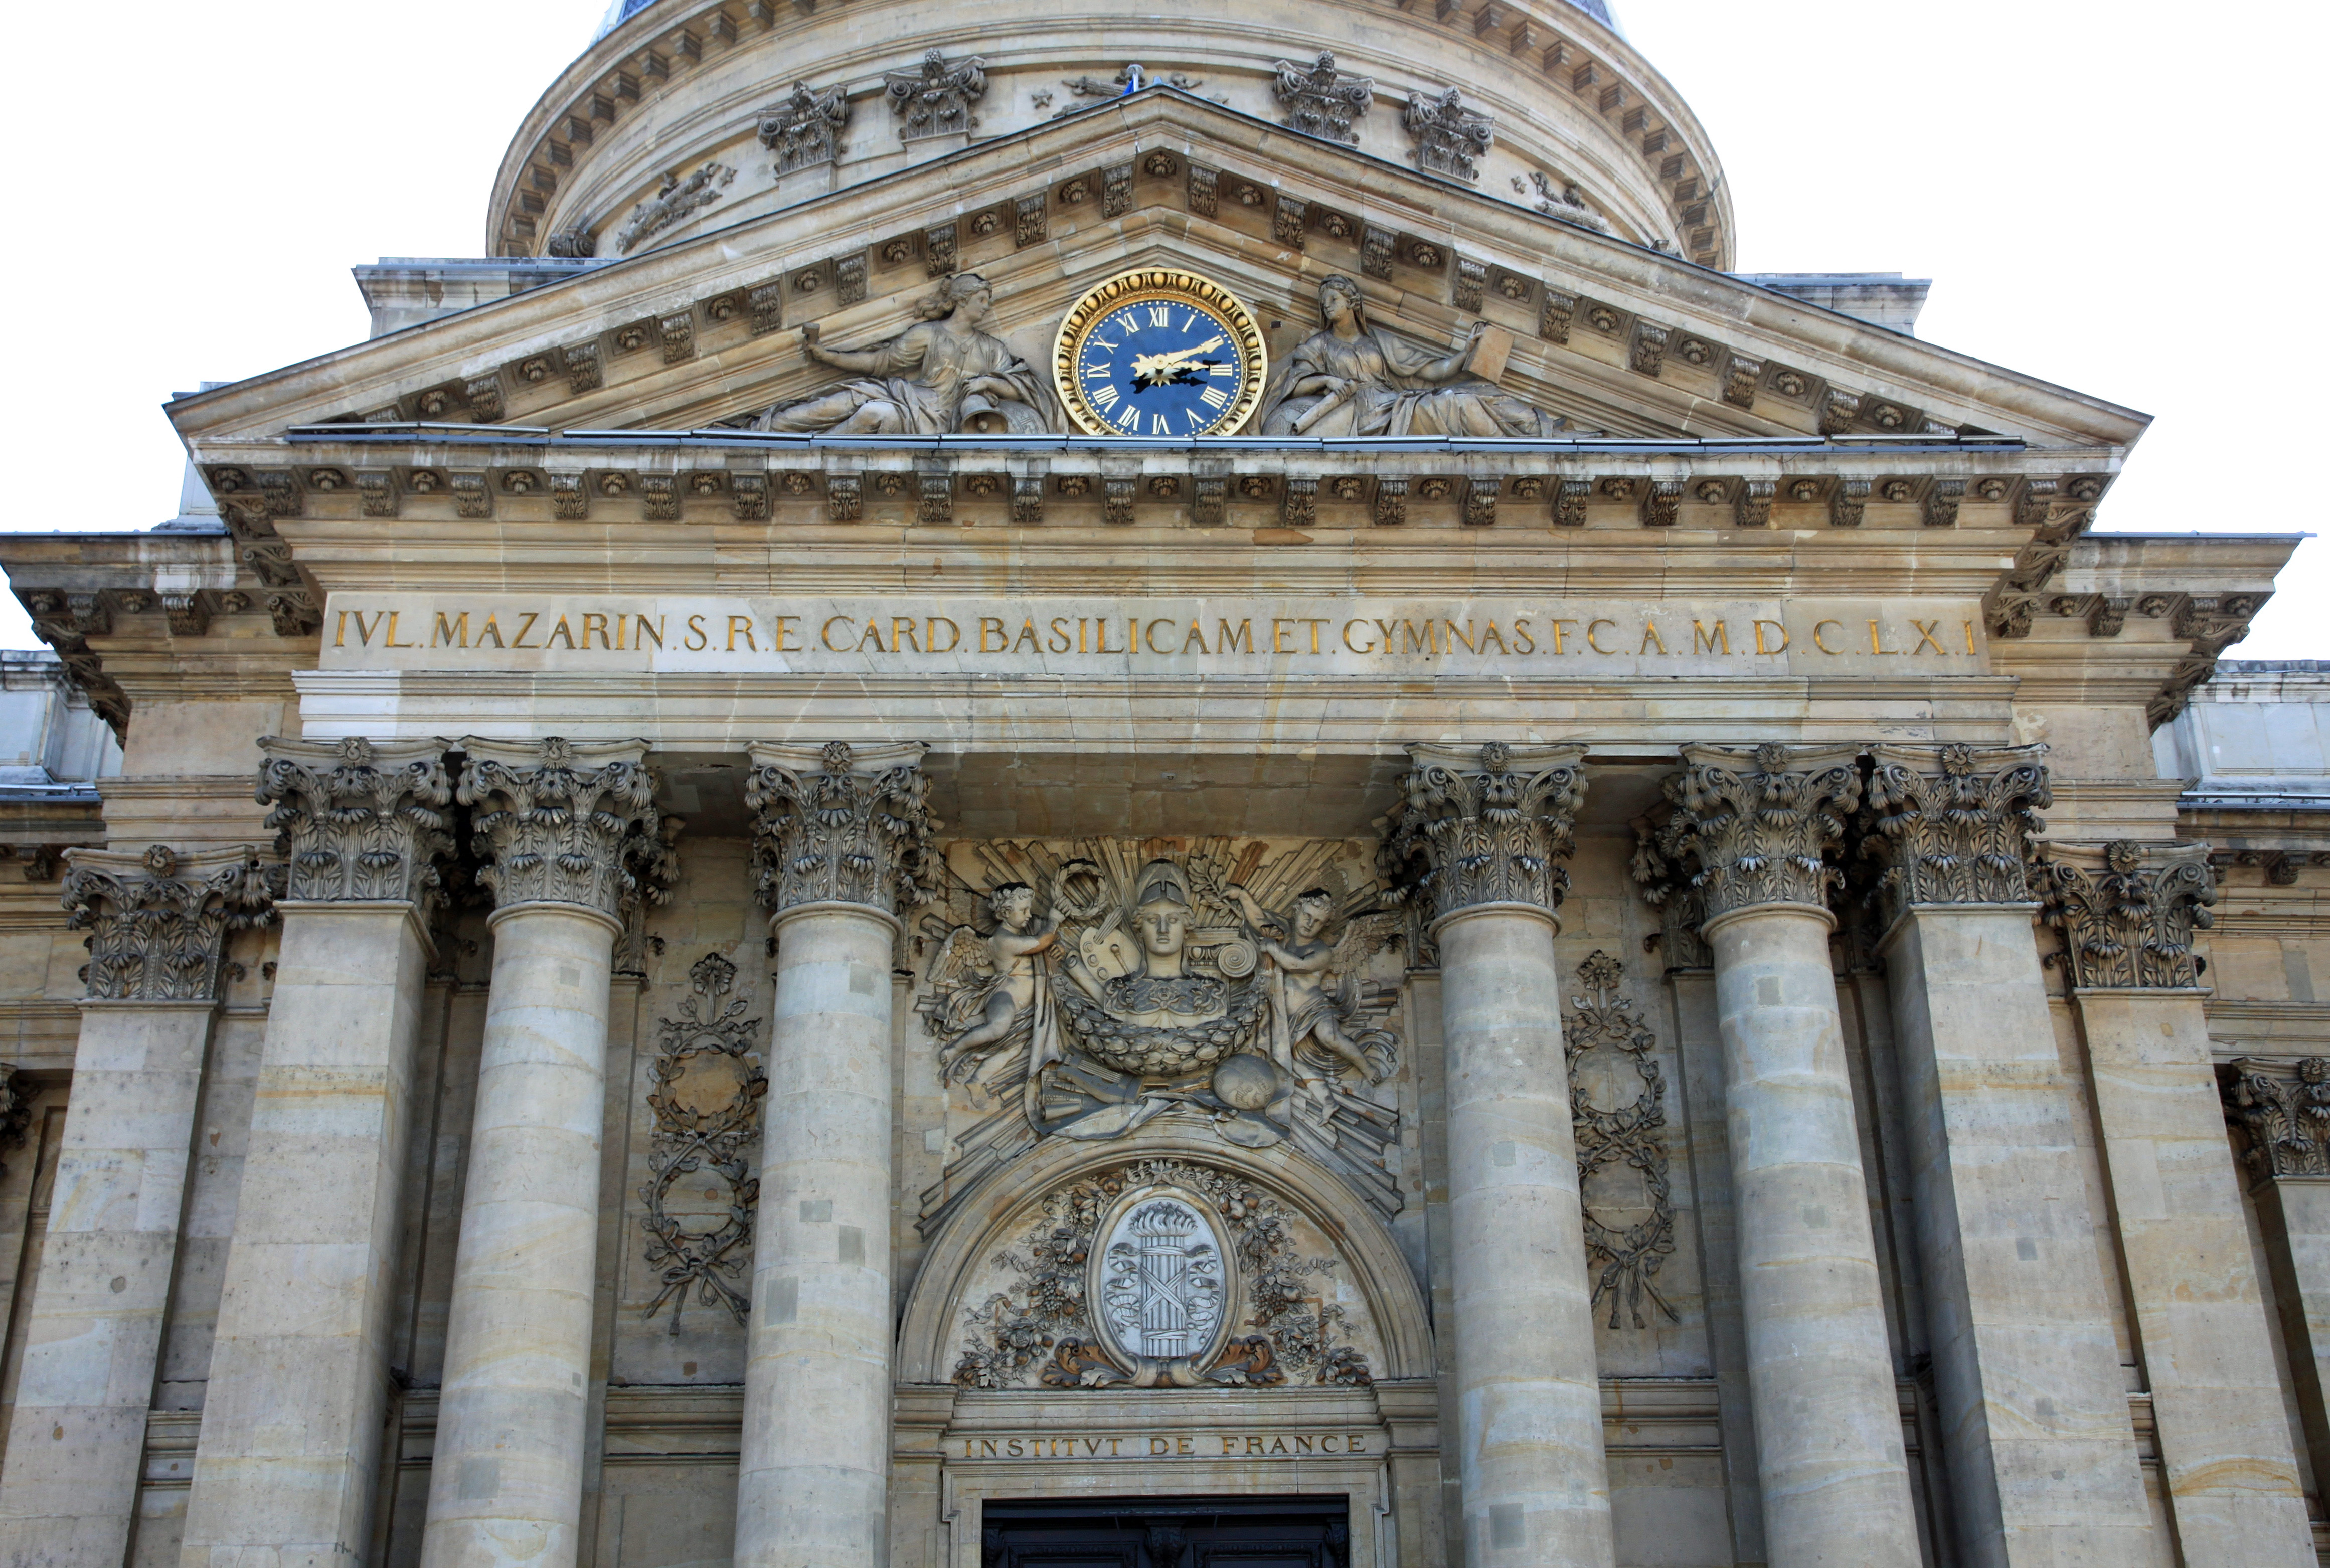 File:Institut de france facade.jpg - Wikimedia Commons